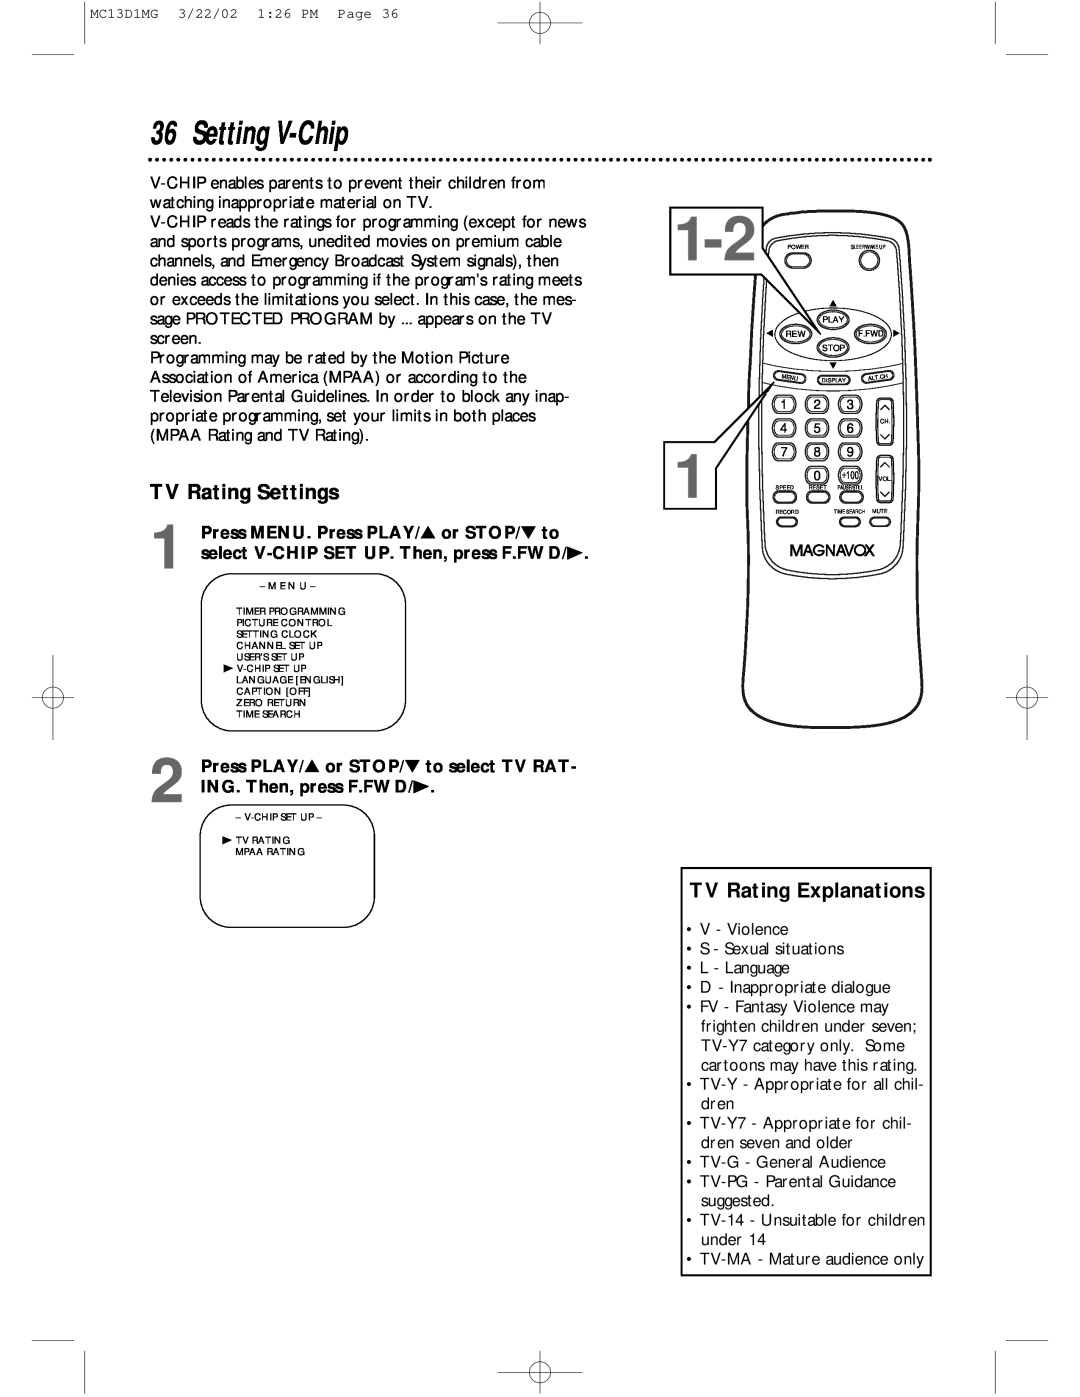 Magnavox MC19D1MG, MC13D1MG owner manual Setting V-Chip, TV Rating Settings, TV Rating Explanations 